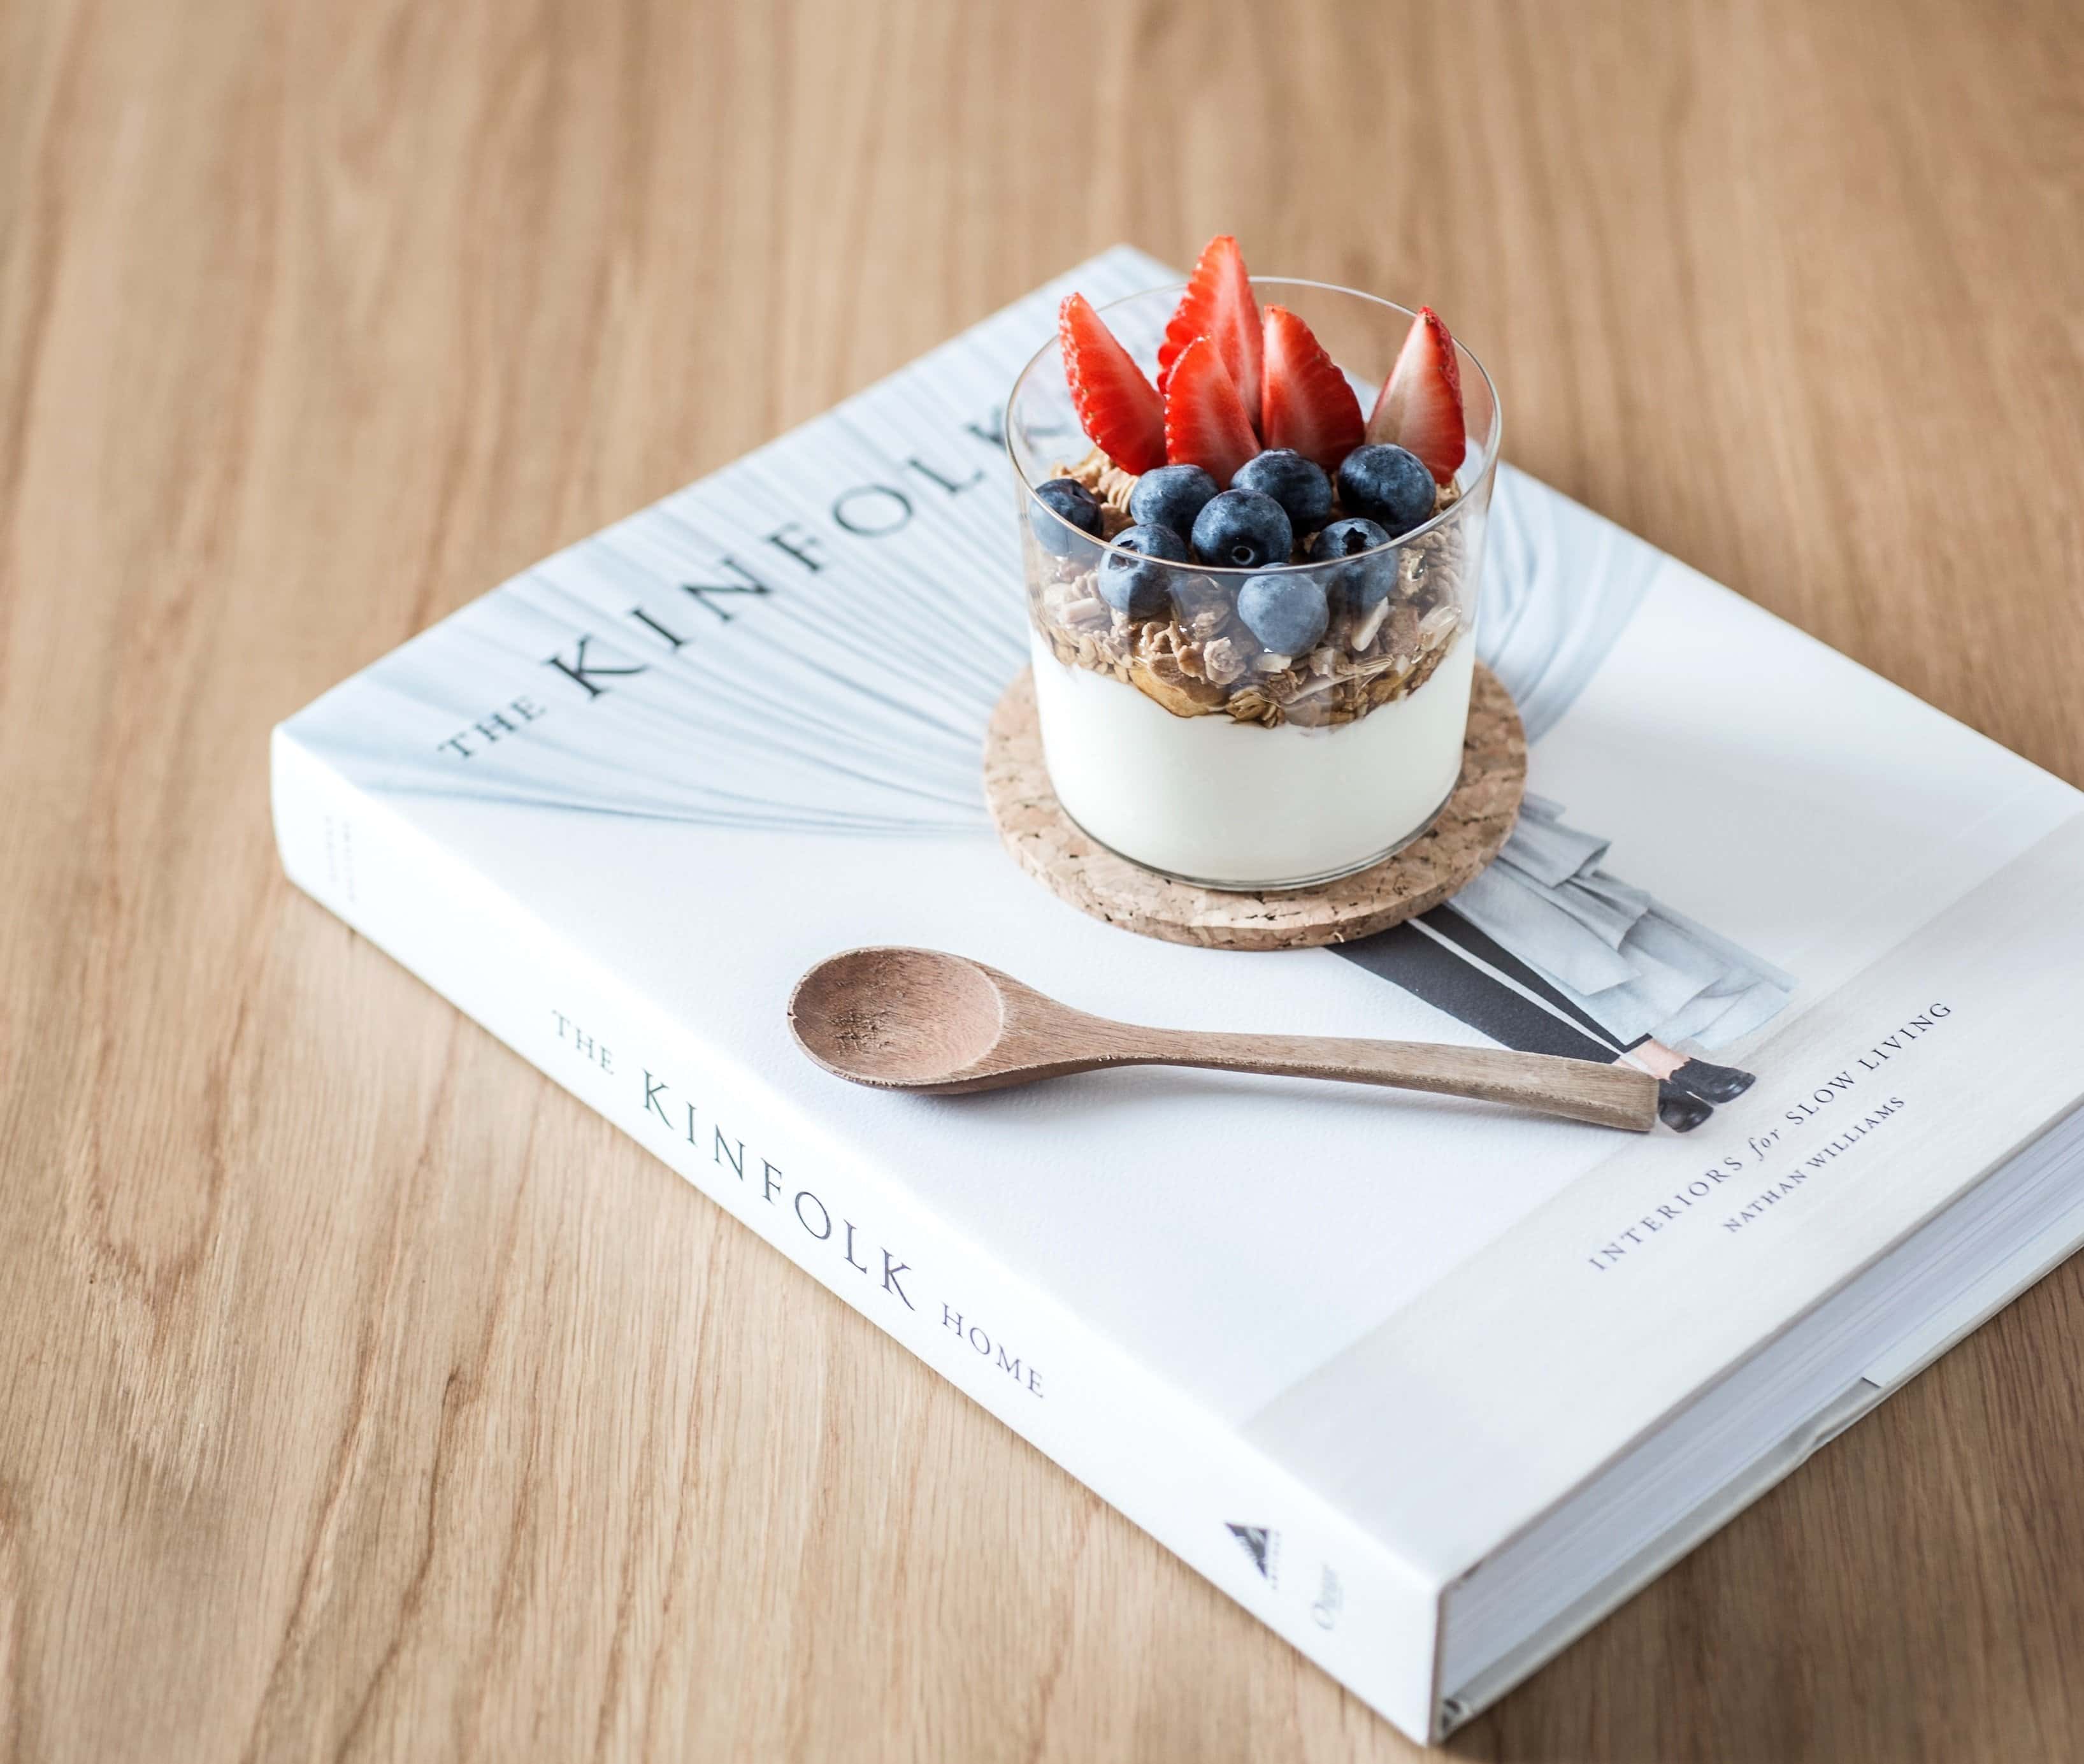 Healthy desserts: myth or magic? #AugustBergInsiders